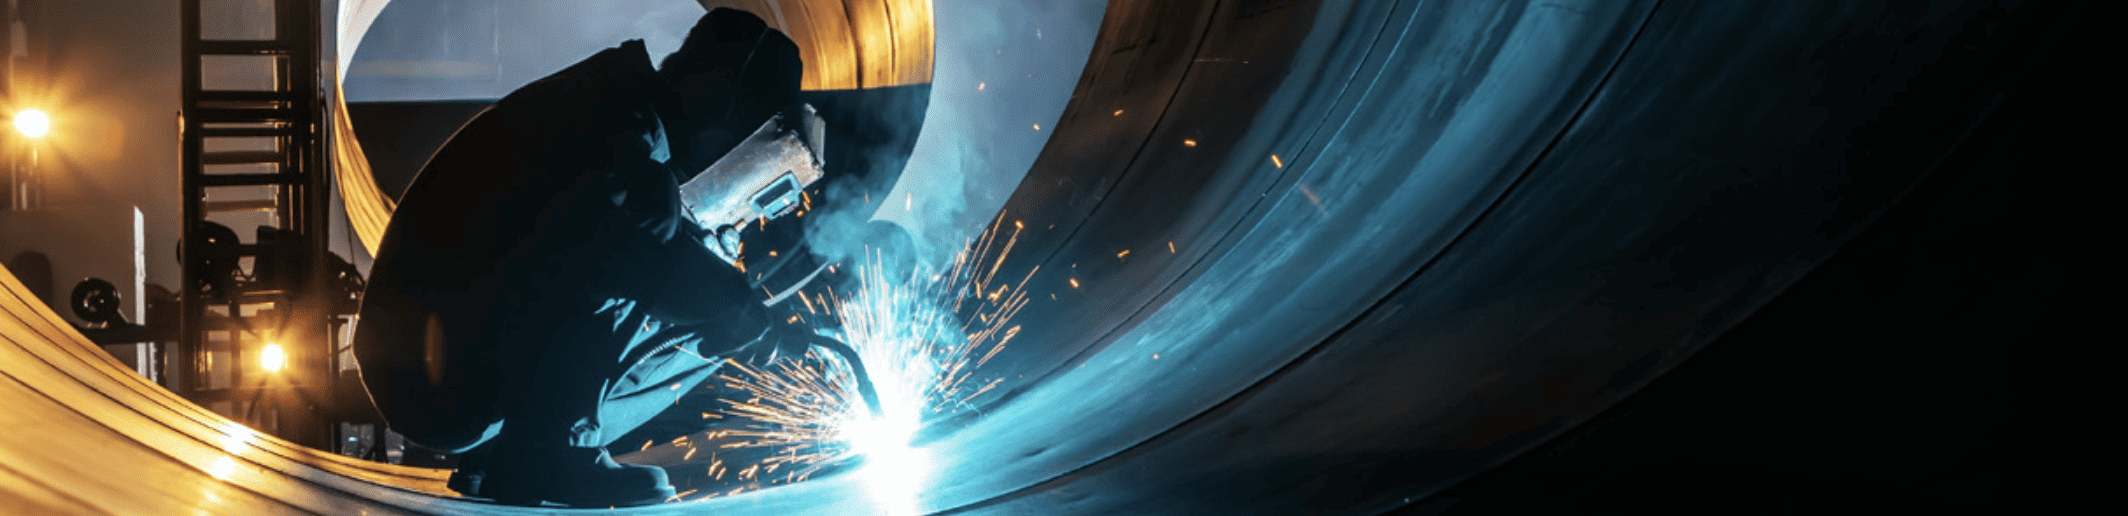 manufacturing employee welding